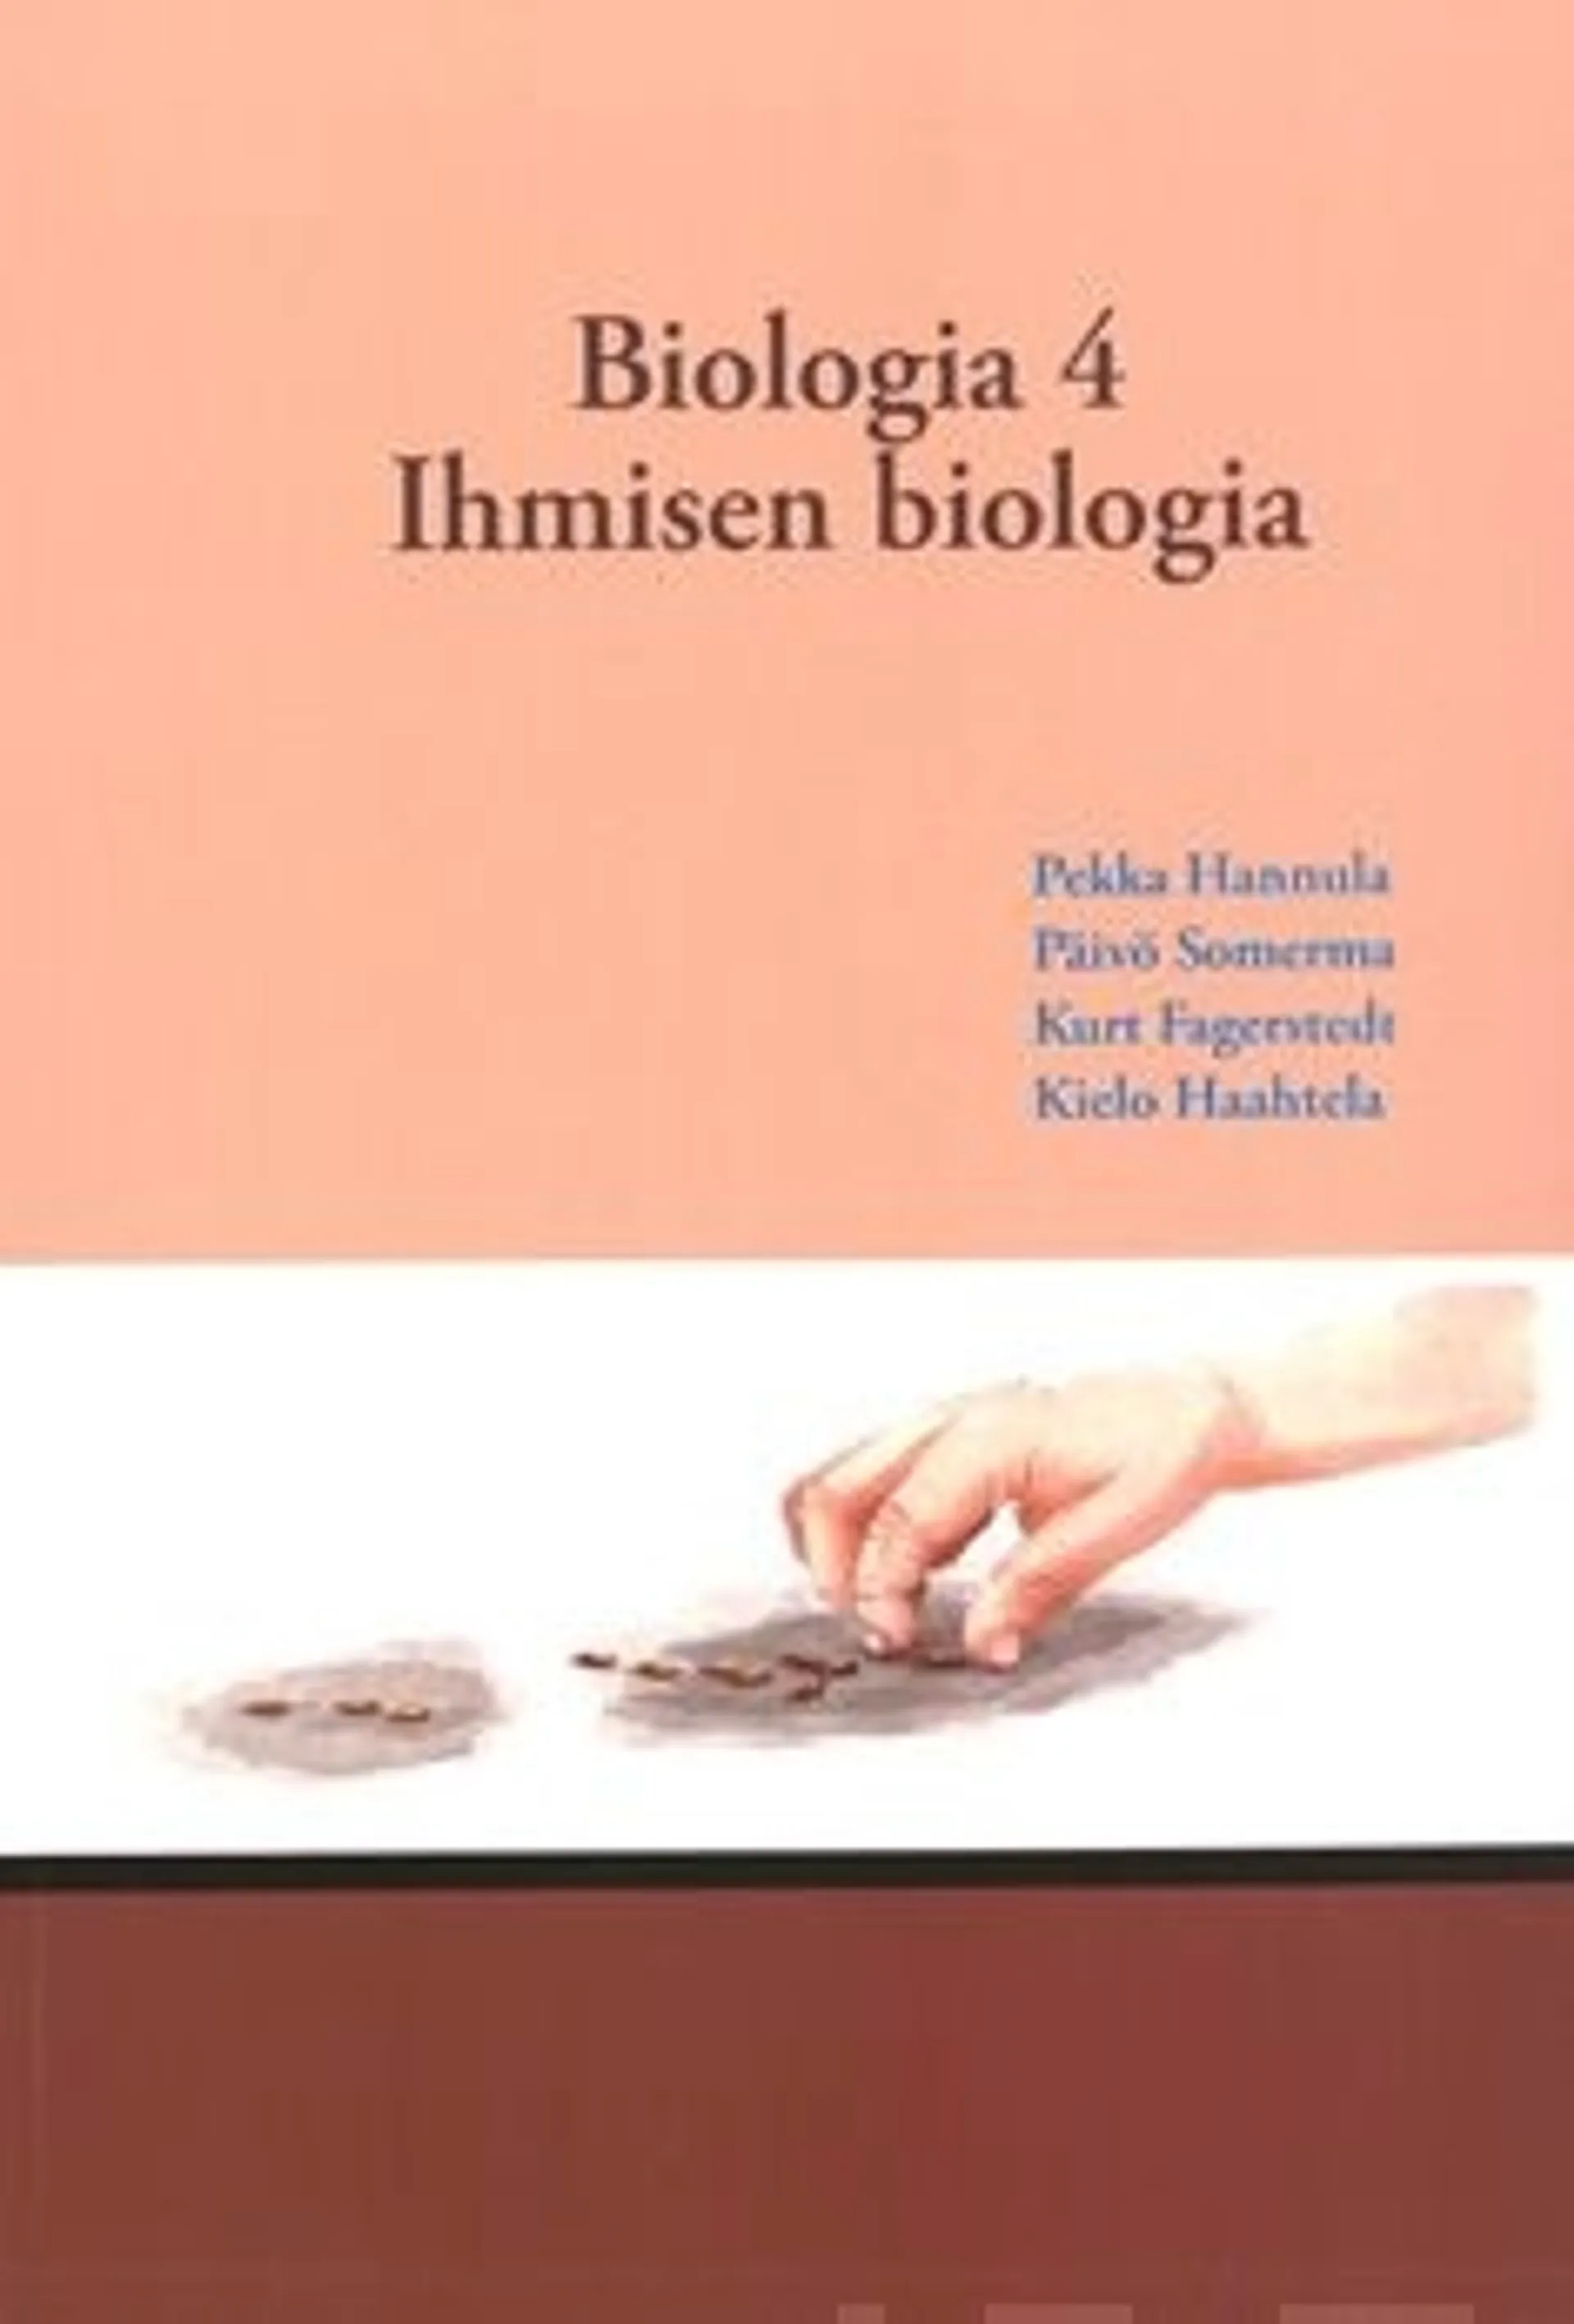 Hannula, Biologia 4